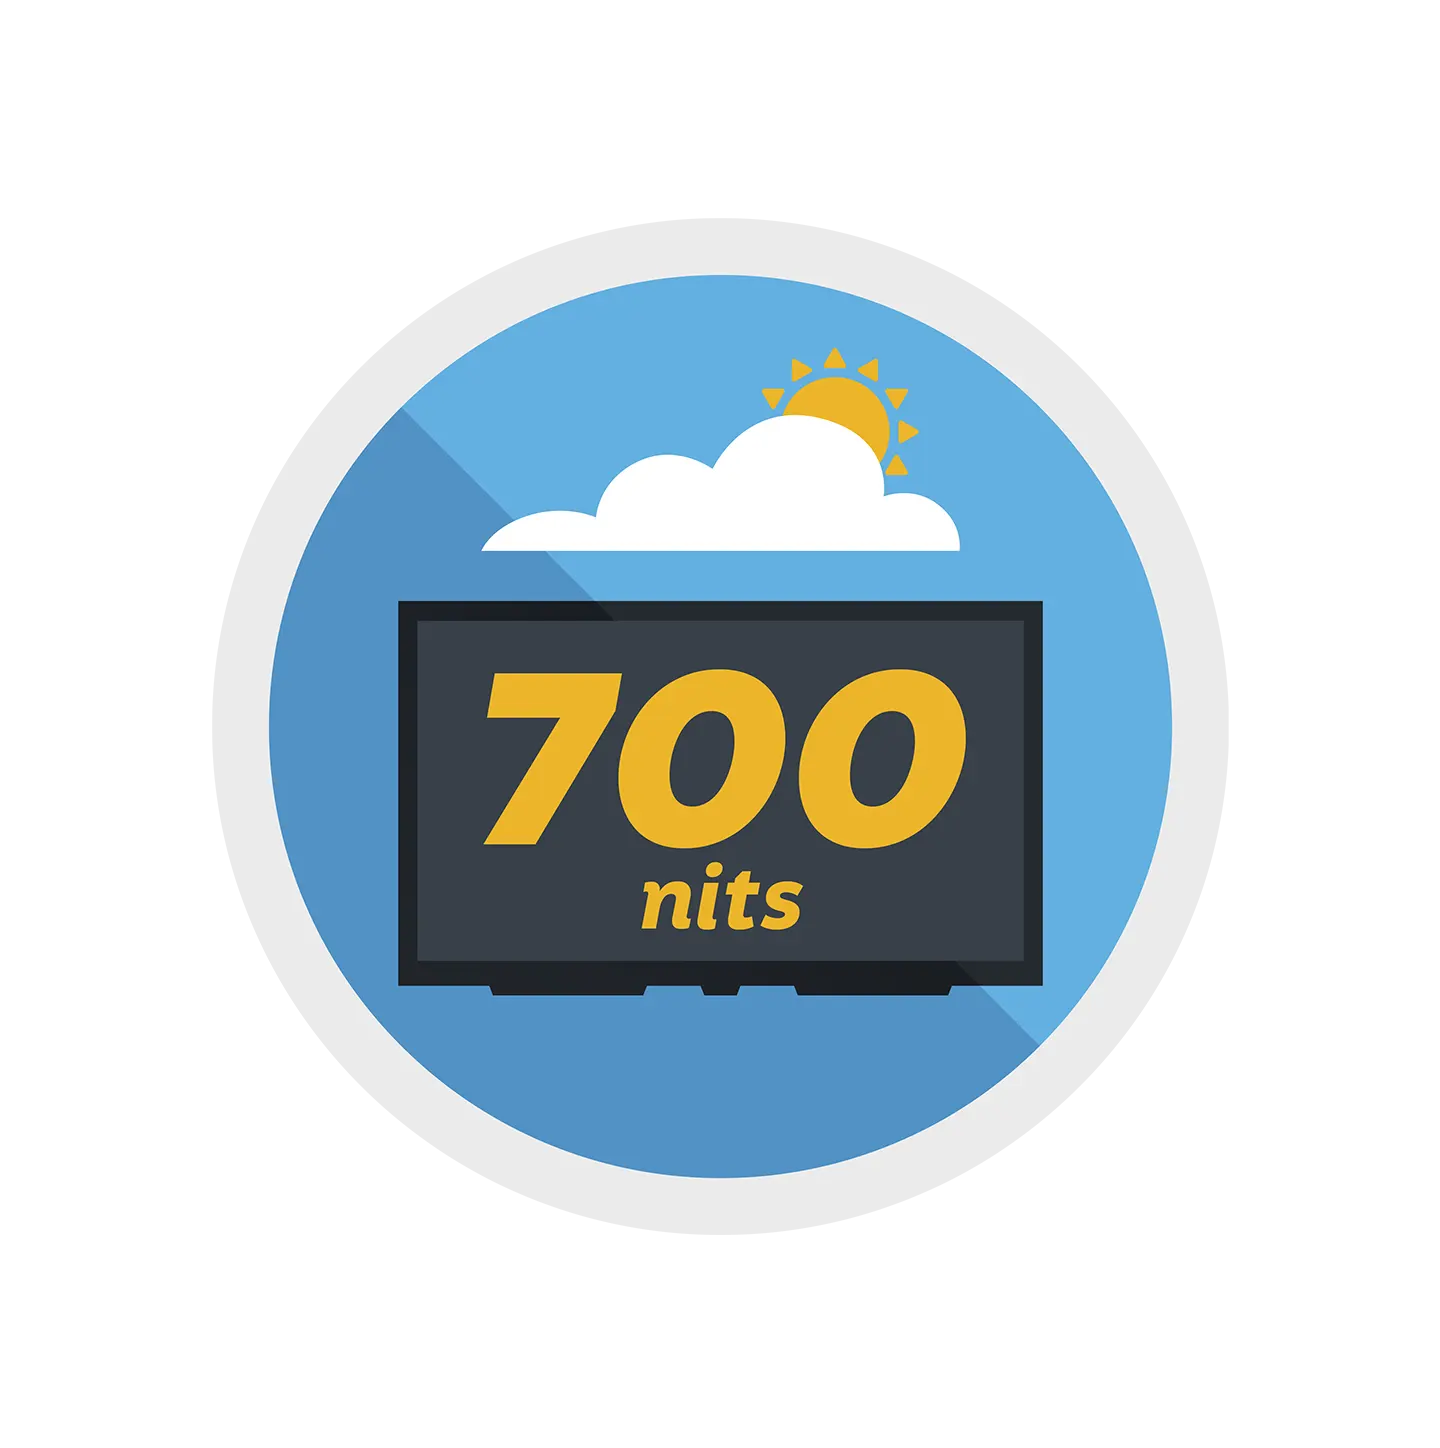 700 nits brightness